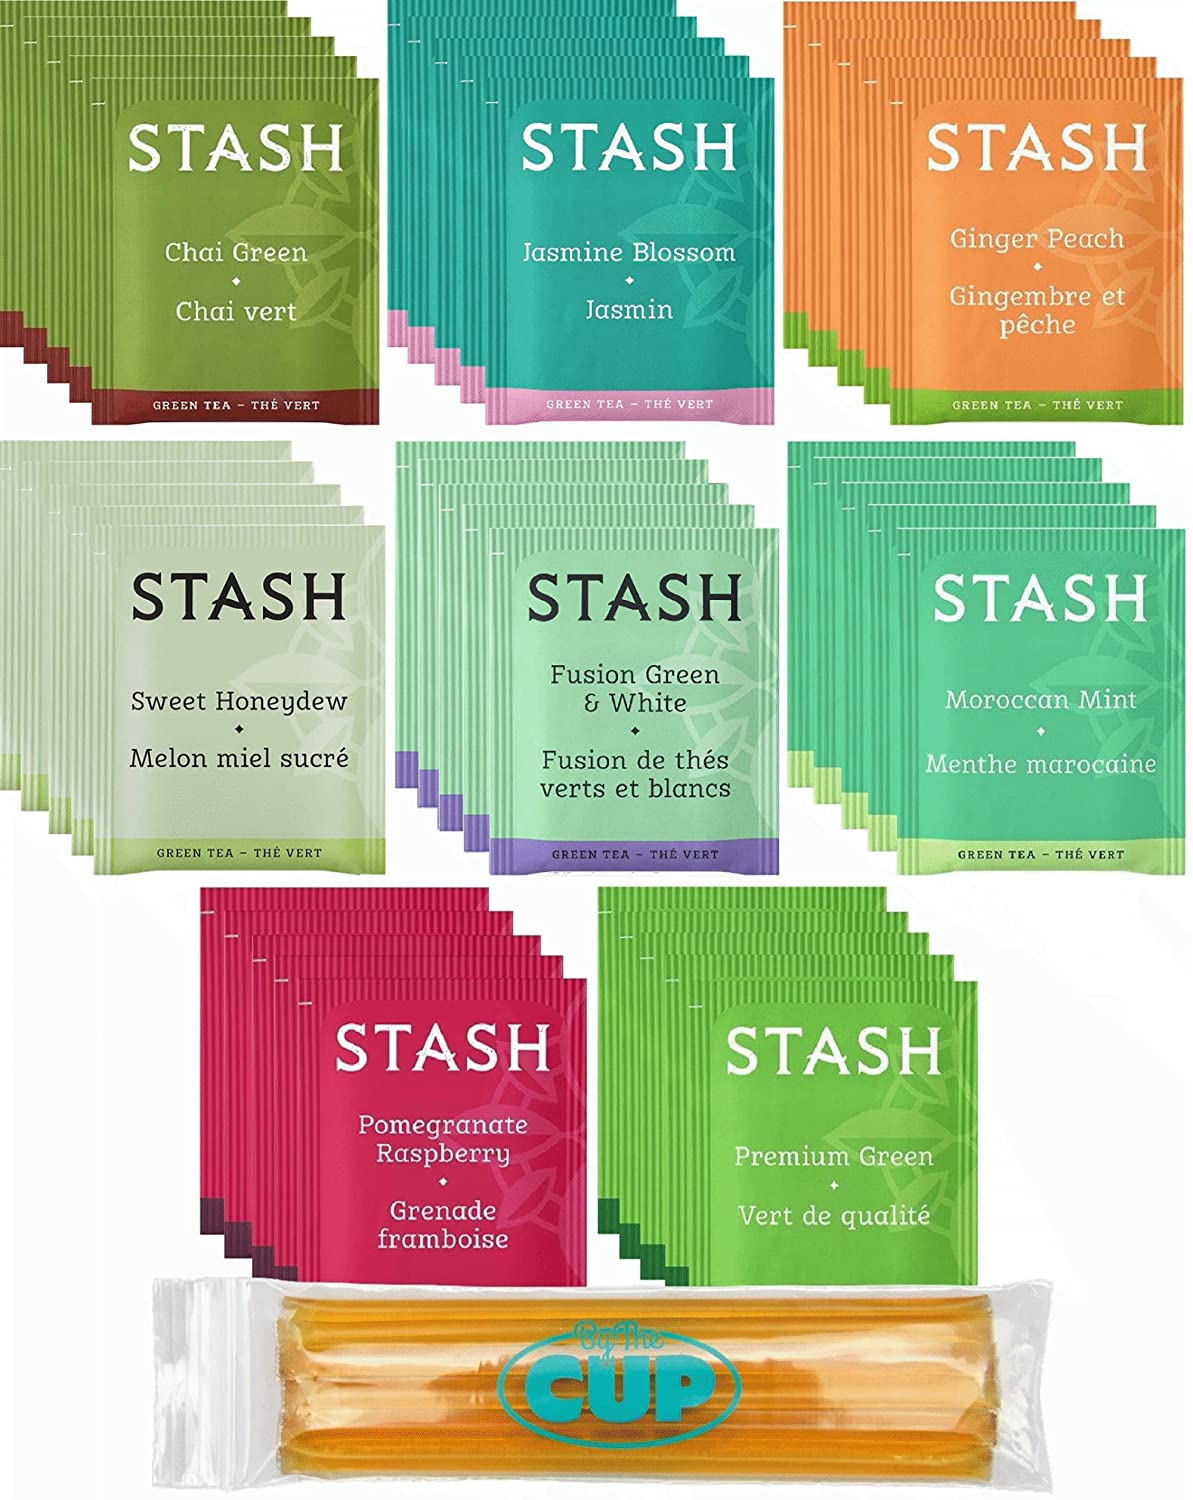 Stash Green & White Blend Tea Sampler - 40 Tea Bag, 8 Flavor Assortment - With By The Cup Honey Stix